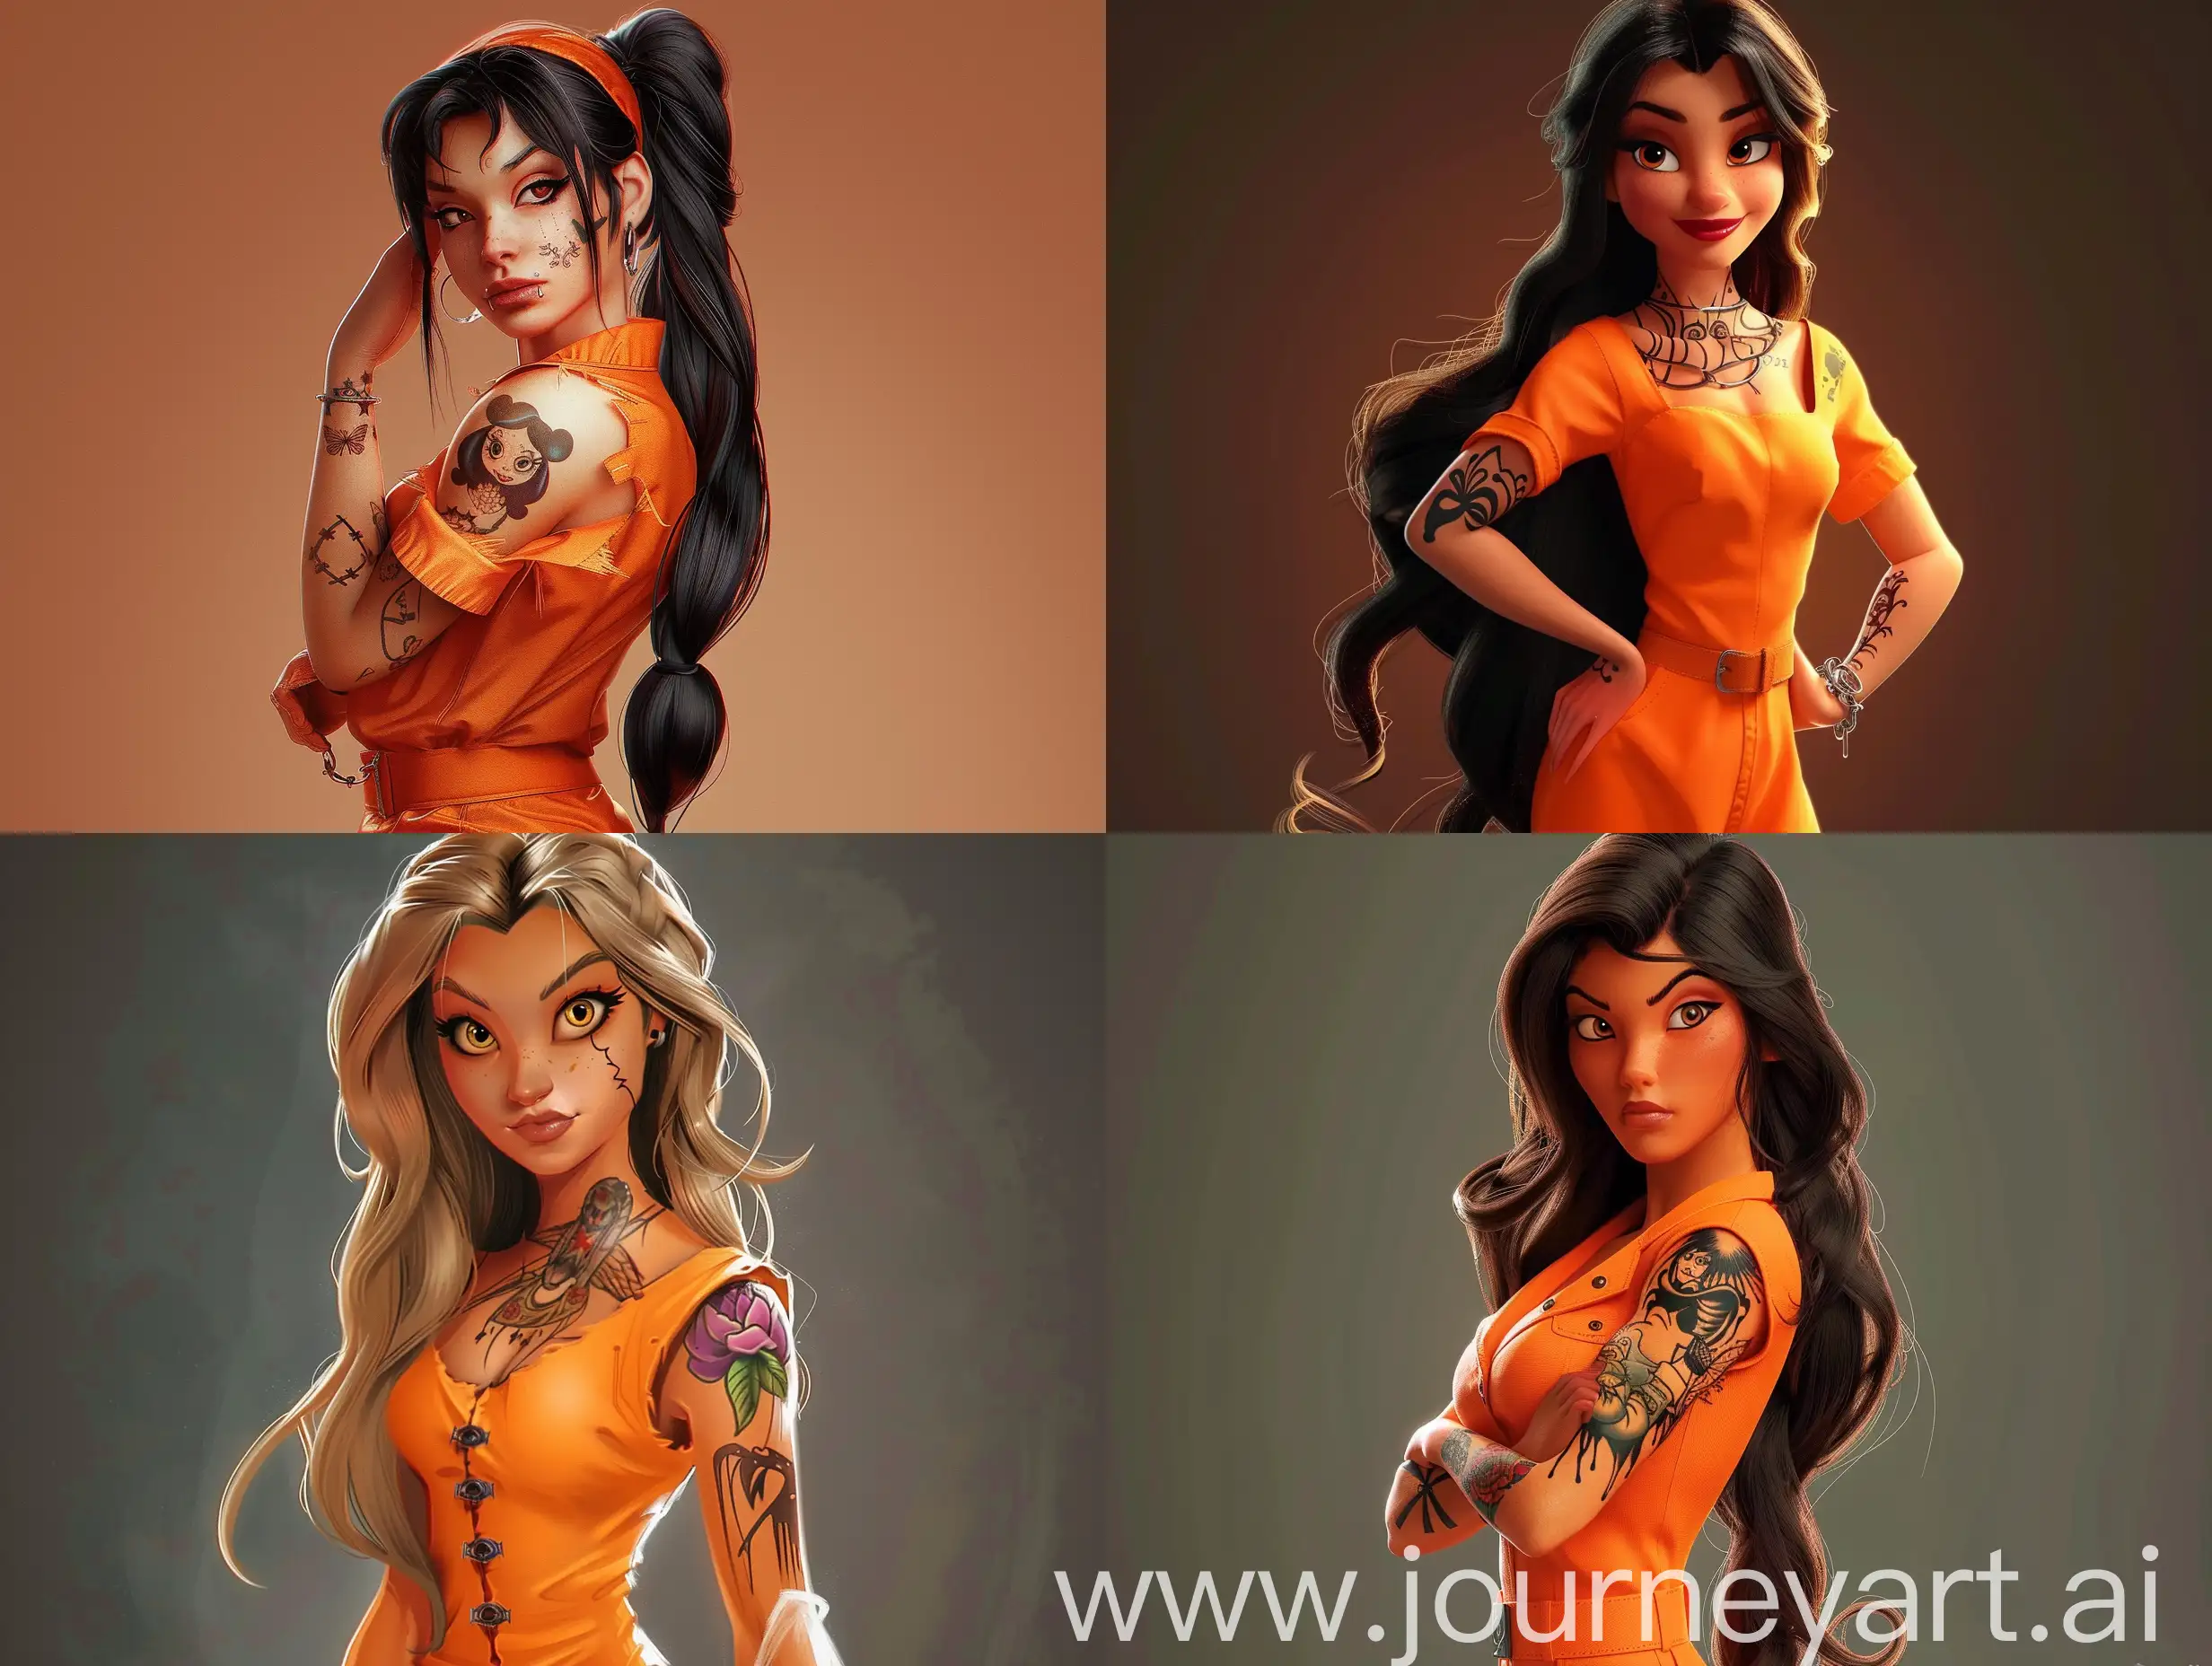 Sinister-Disney-Princess-in-Orange-Prison-Uniform-with-Tattoo